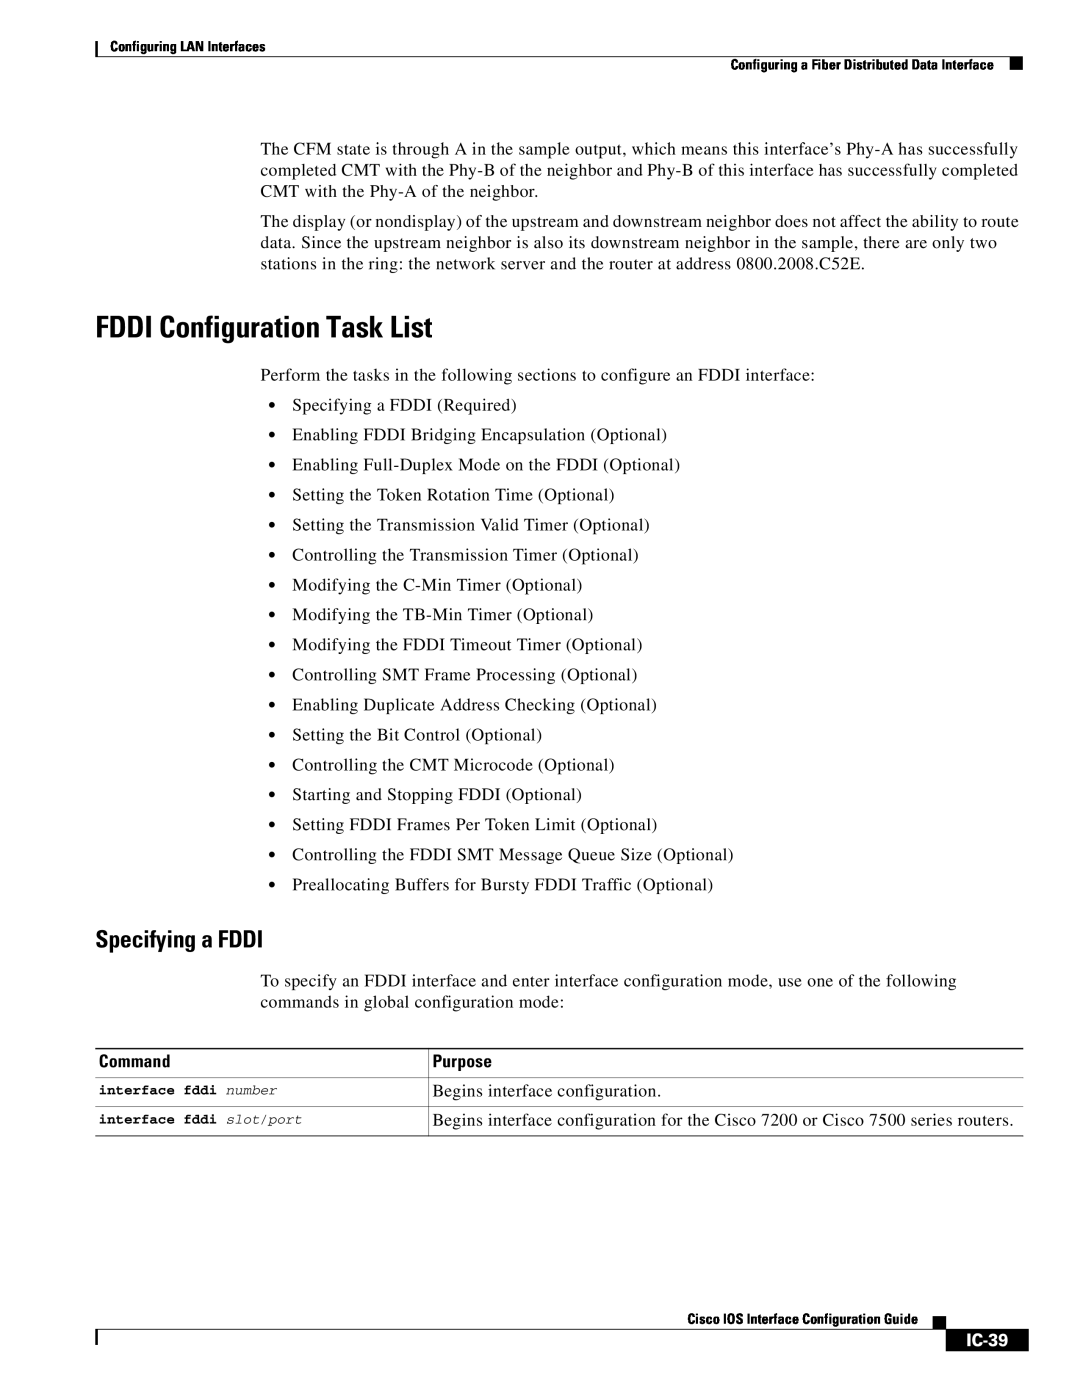 Cisco Systems IC-23 manual FDDI Configuration Task List, Specifying a FDDI, IC-39, Command, Purpose 